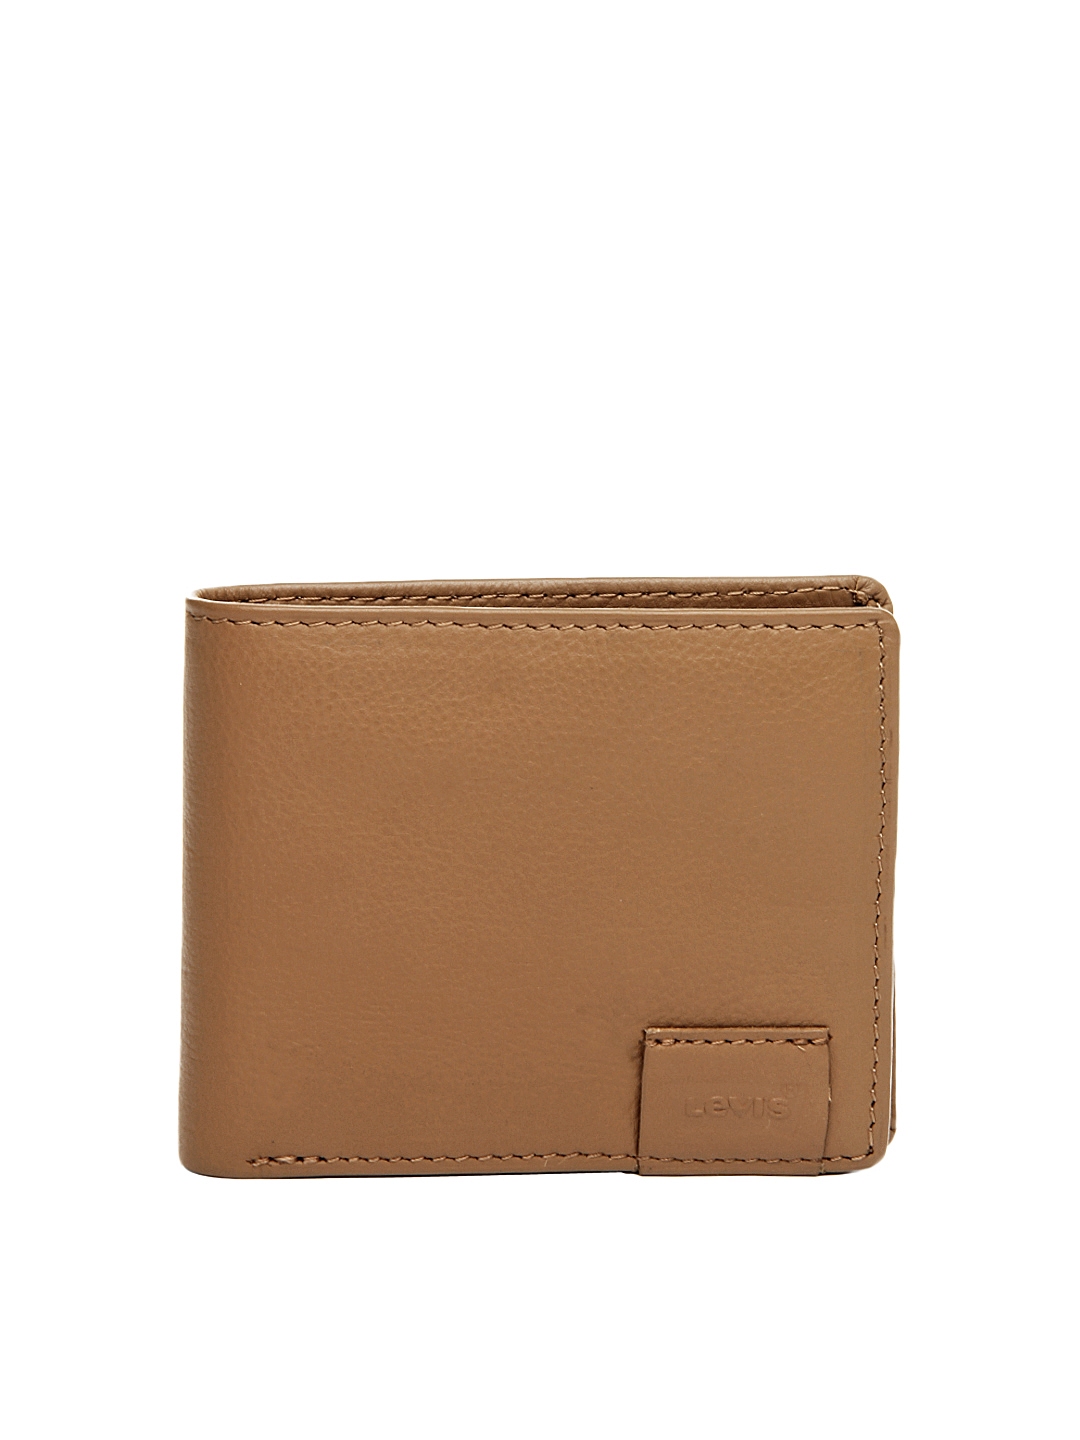 Buy Levis Men Brown Leather Wallet - Wallets for Men 166254 | Myntra